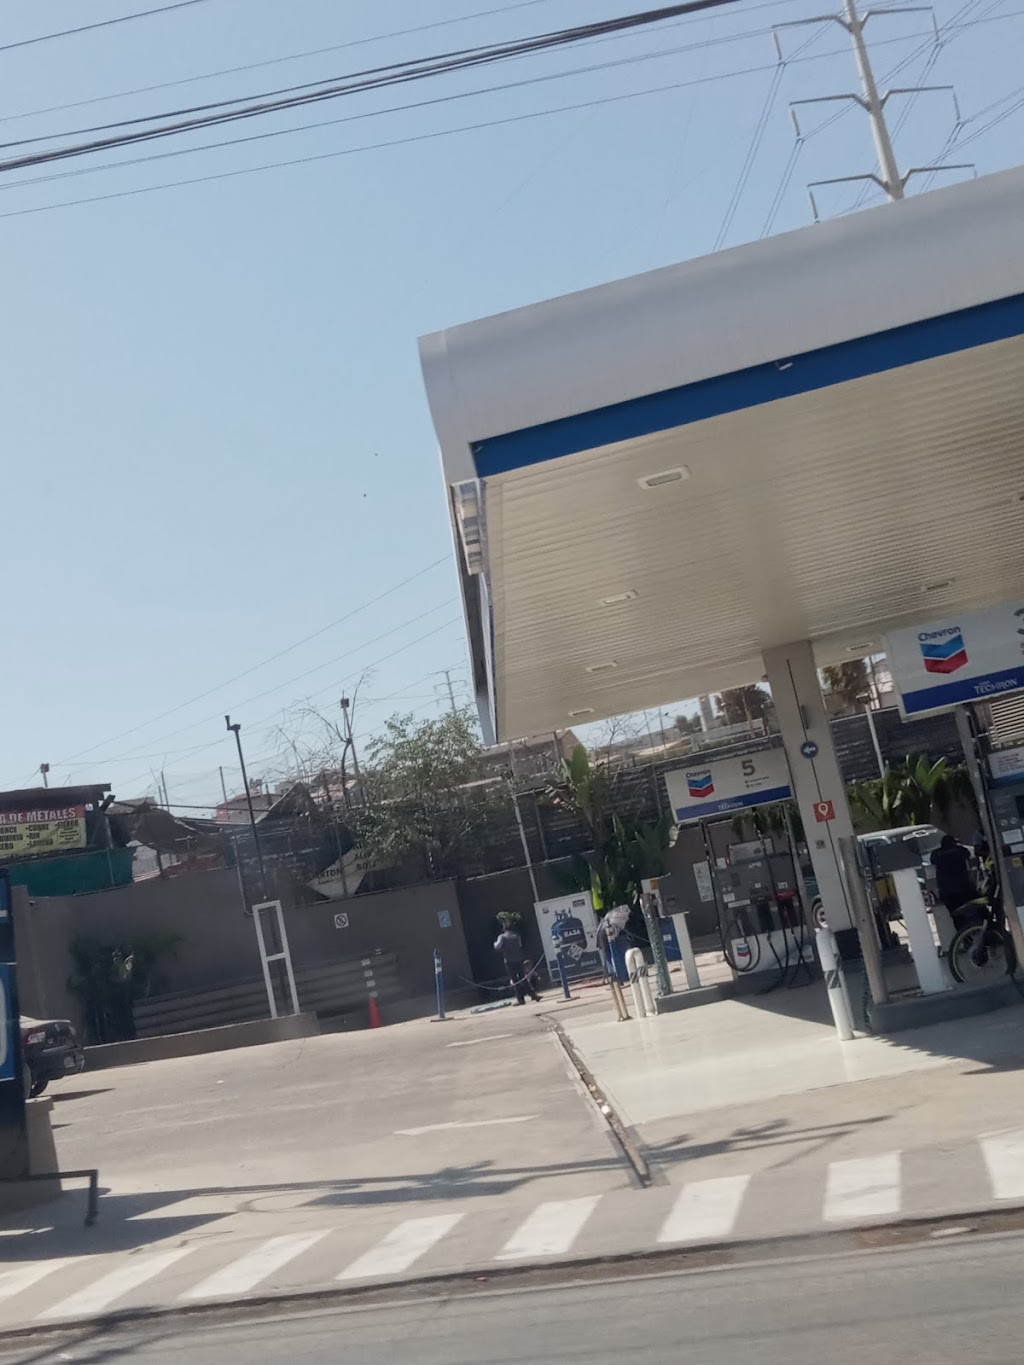 Gasolinera Estación Cucapa S.A. de C.V. 7161 | Blvd. Cucapah 2171, Villafontana, Lomas del Matamoros, 22206 Tijuana, B.C., Mexico | Phone: 664 633 3121